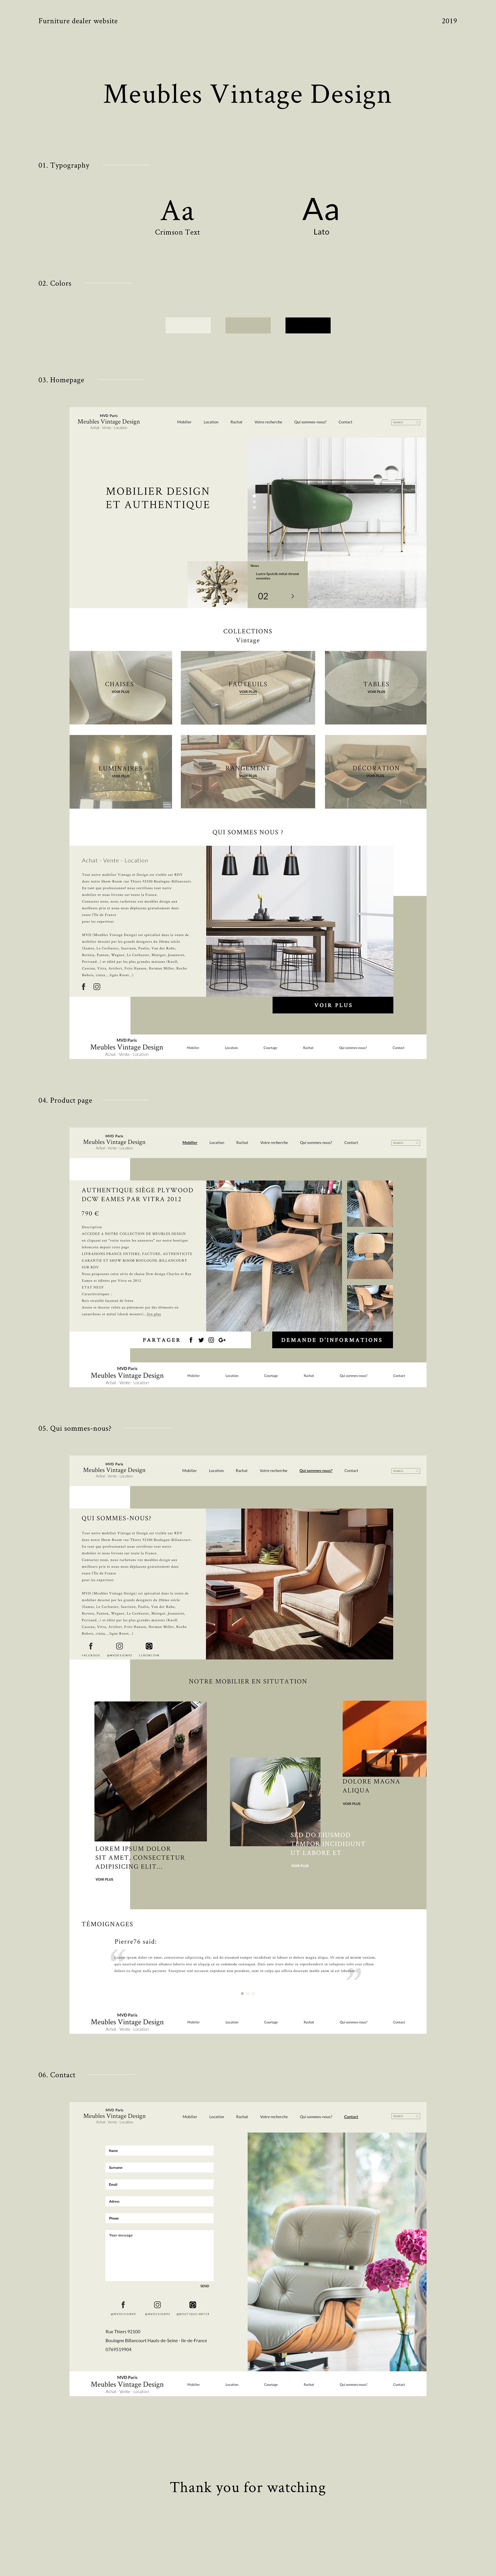 Website furniture shop Interior e-commerce store product ux/ui branding 